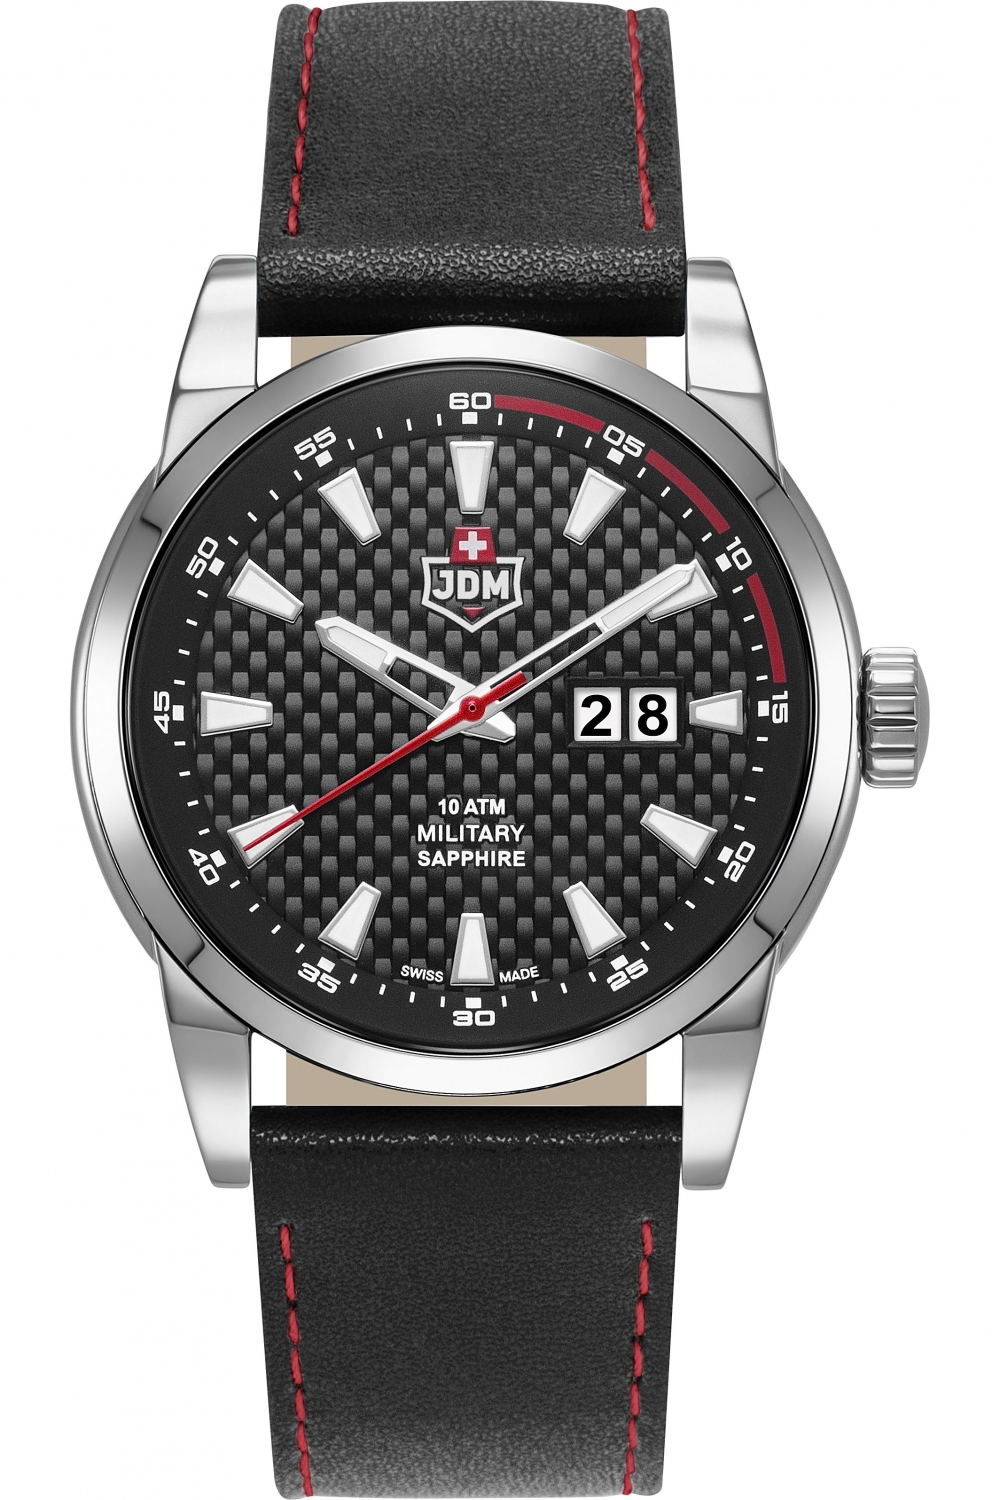 JDM Military (Jacques Du Manoir) - WG013-01 - FOXTROT - Made In Switzerland - Wrist Watch for Men - 10 ATM